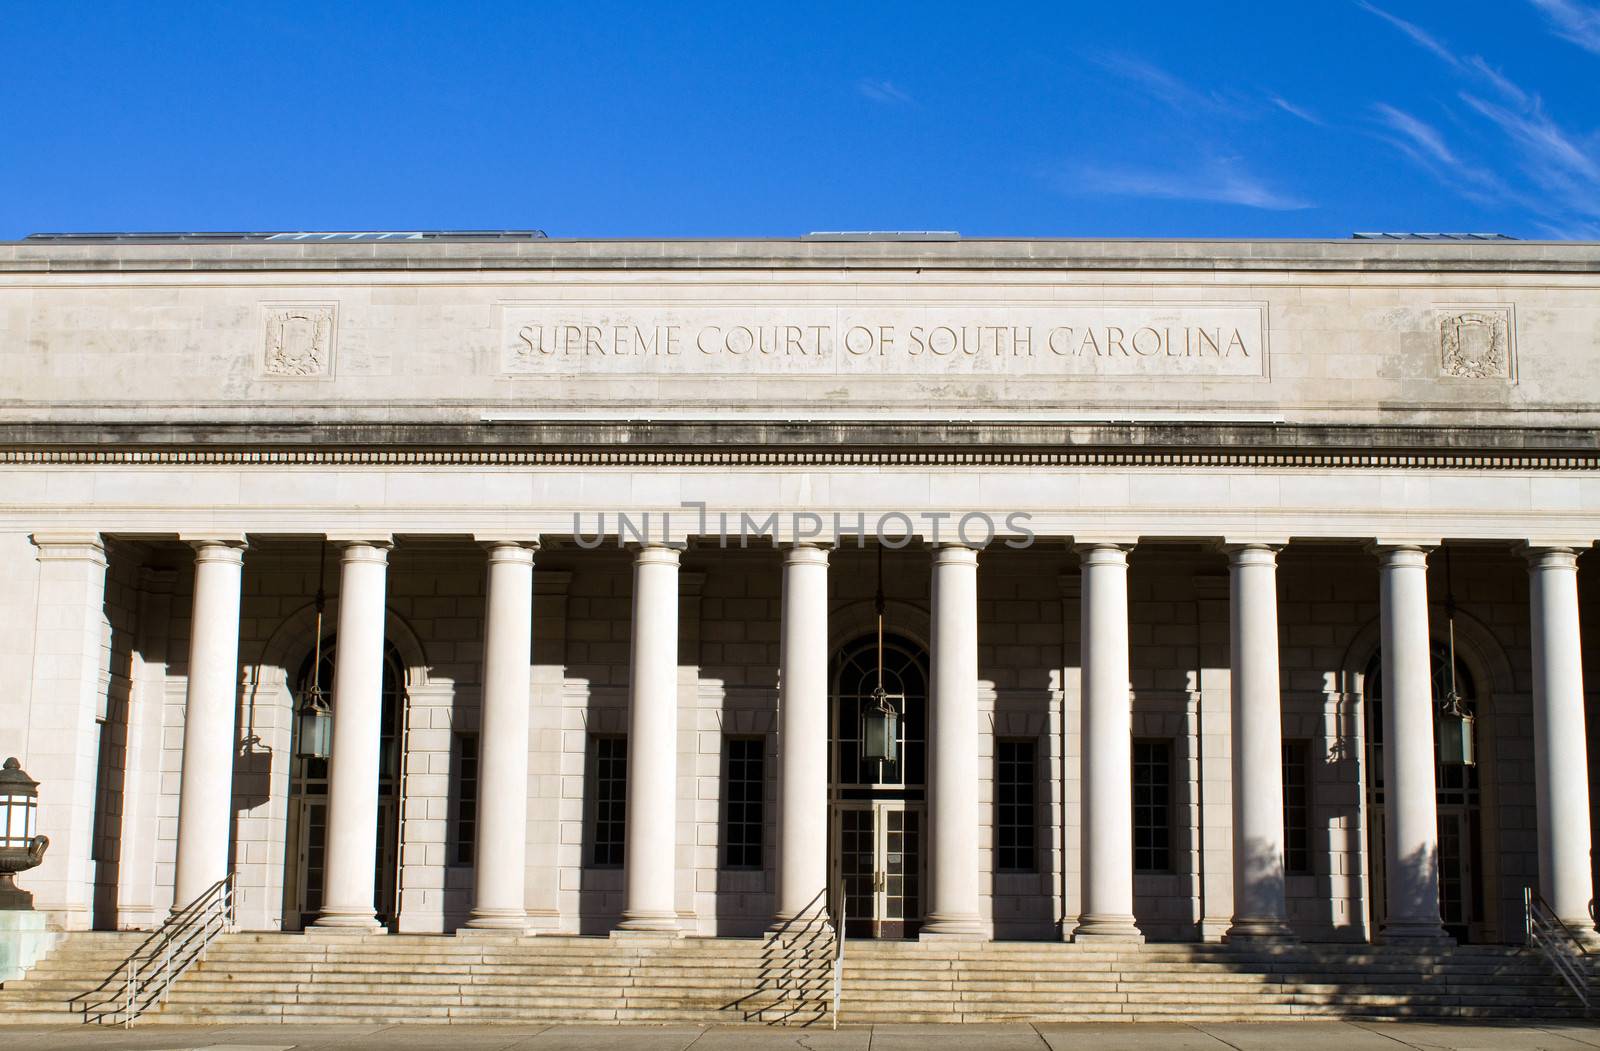 Supreme Court of South Carolina by sframe